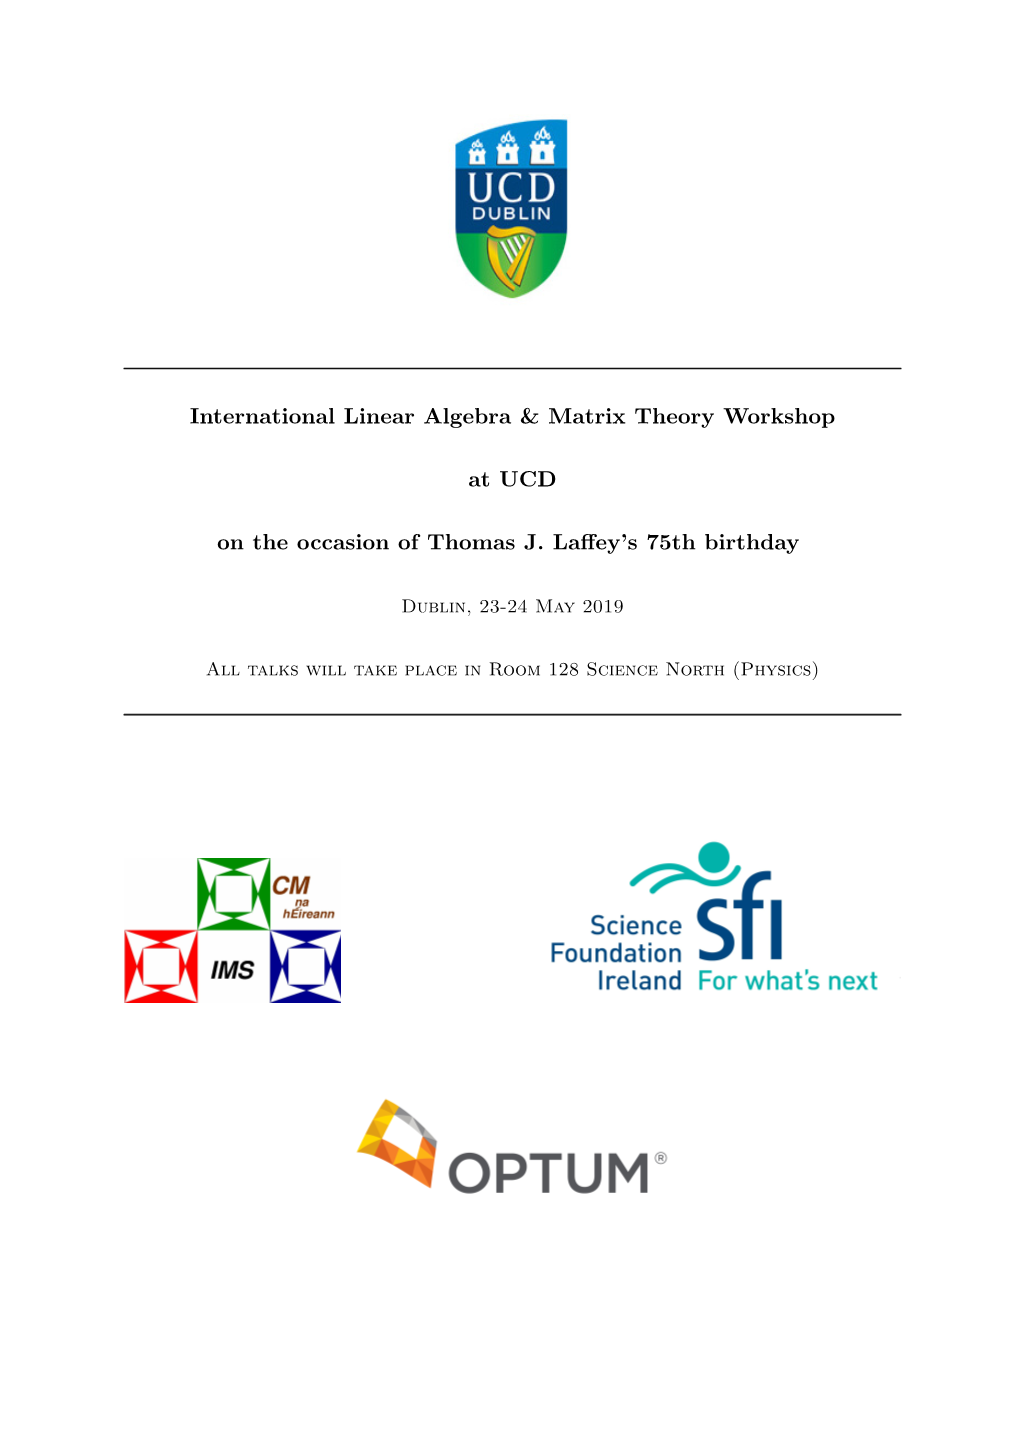 International Linear Algebra & Matrix Theory Workshop at UCD on The